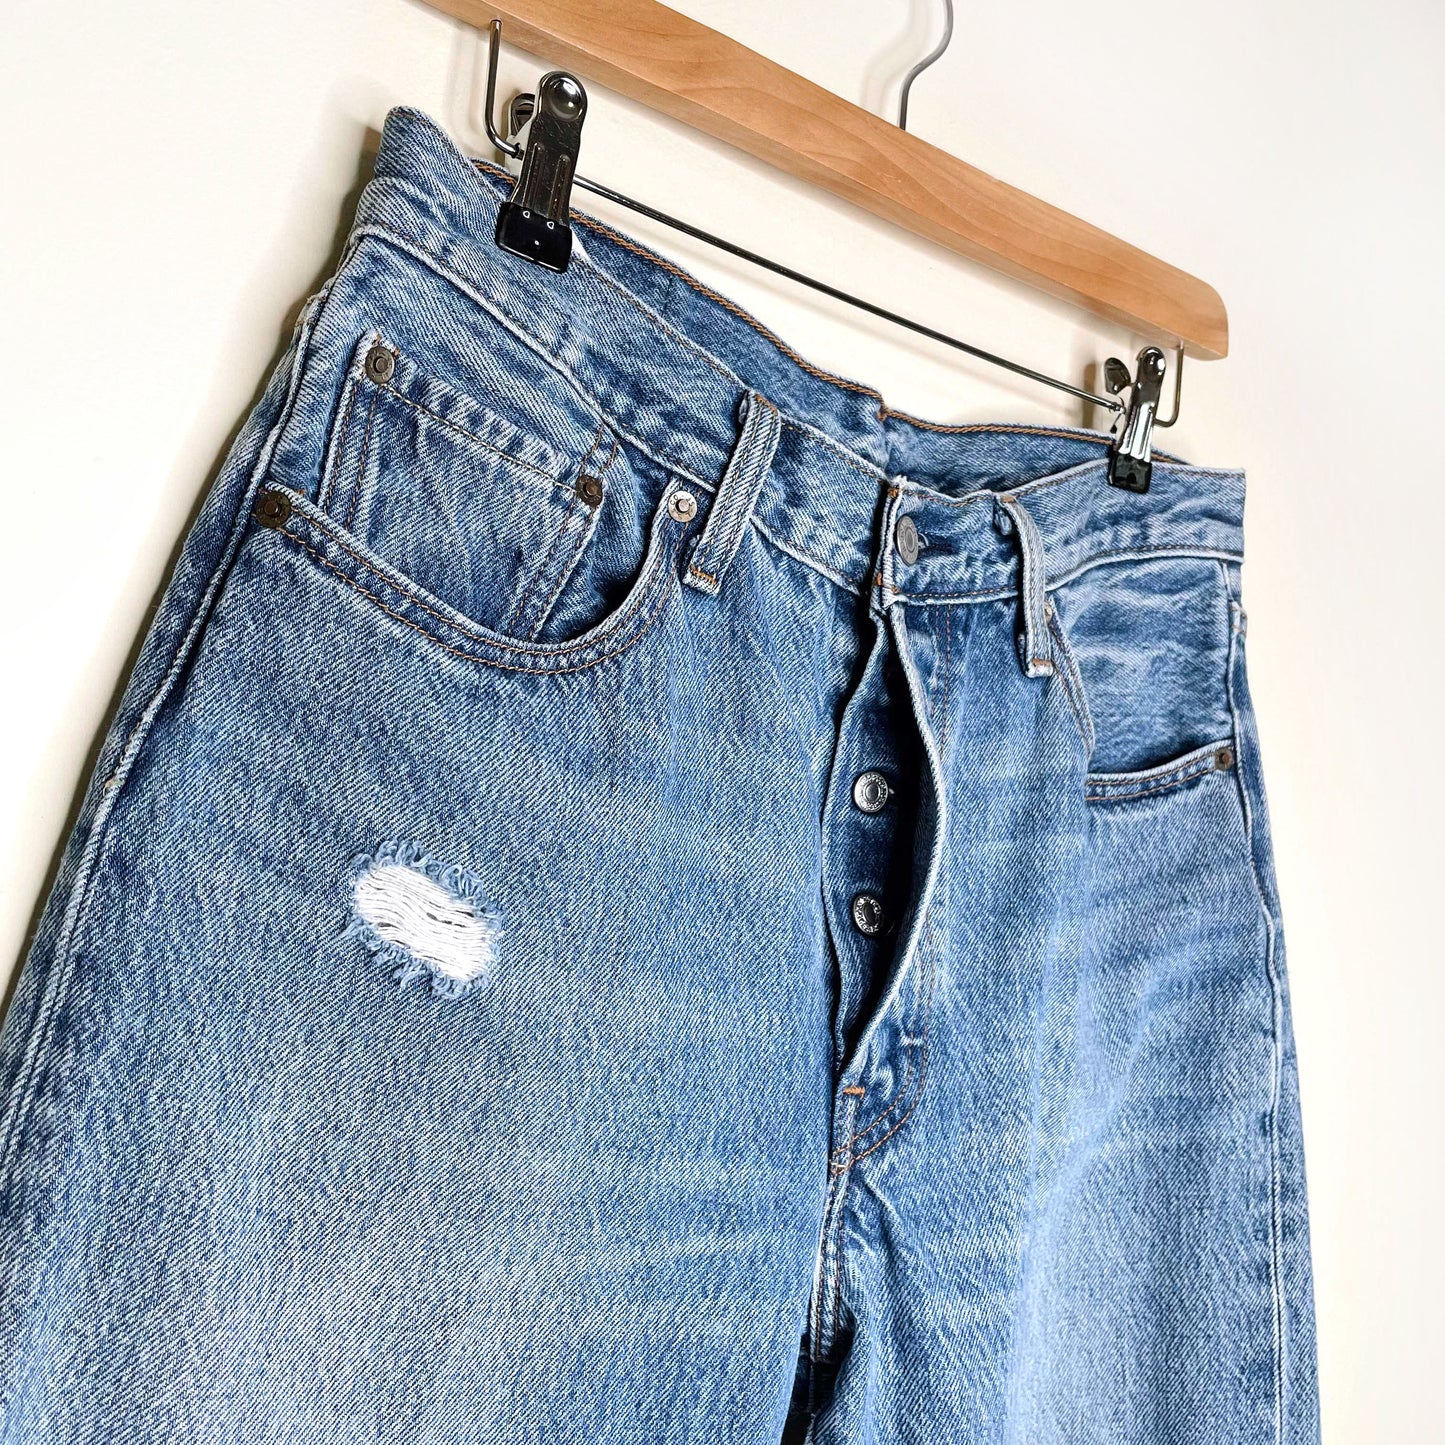 levi's 501 medium wash ripped knees original fit jeans - size 29